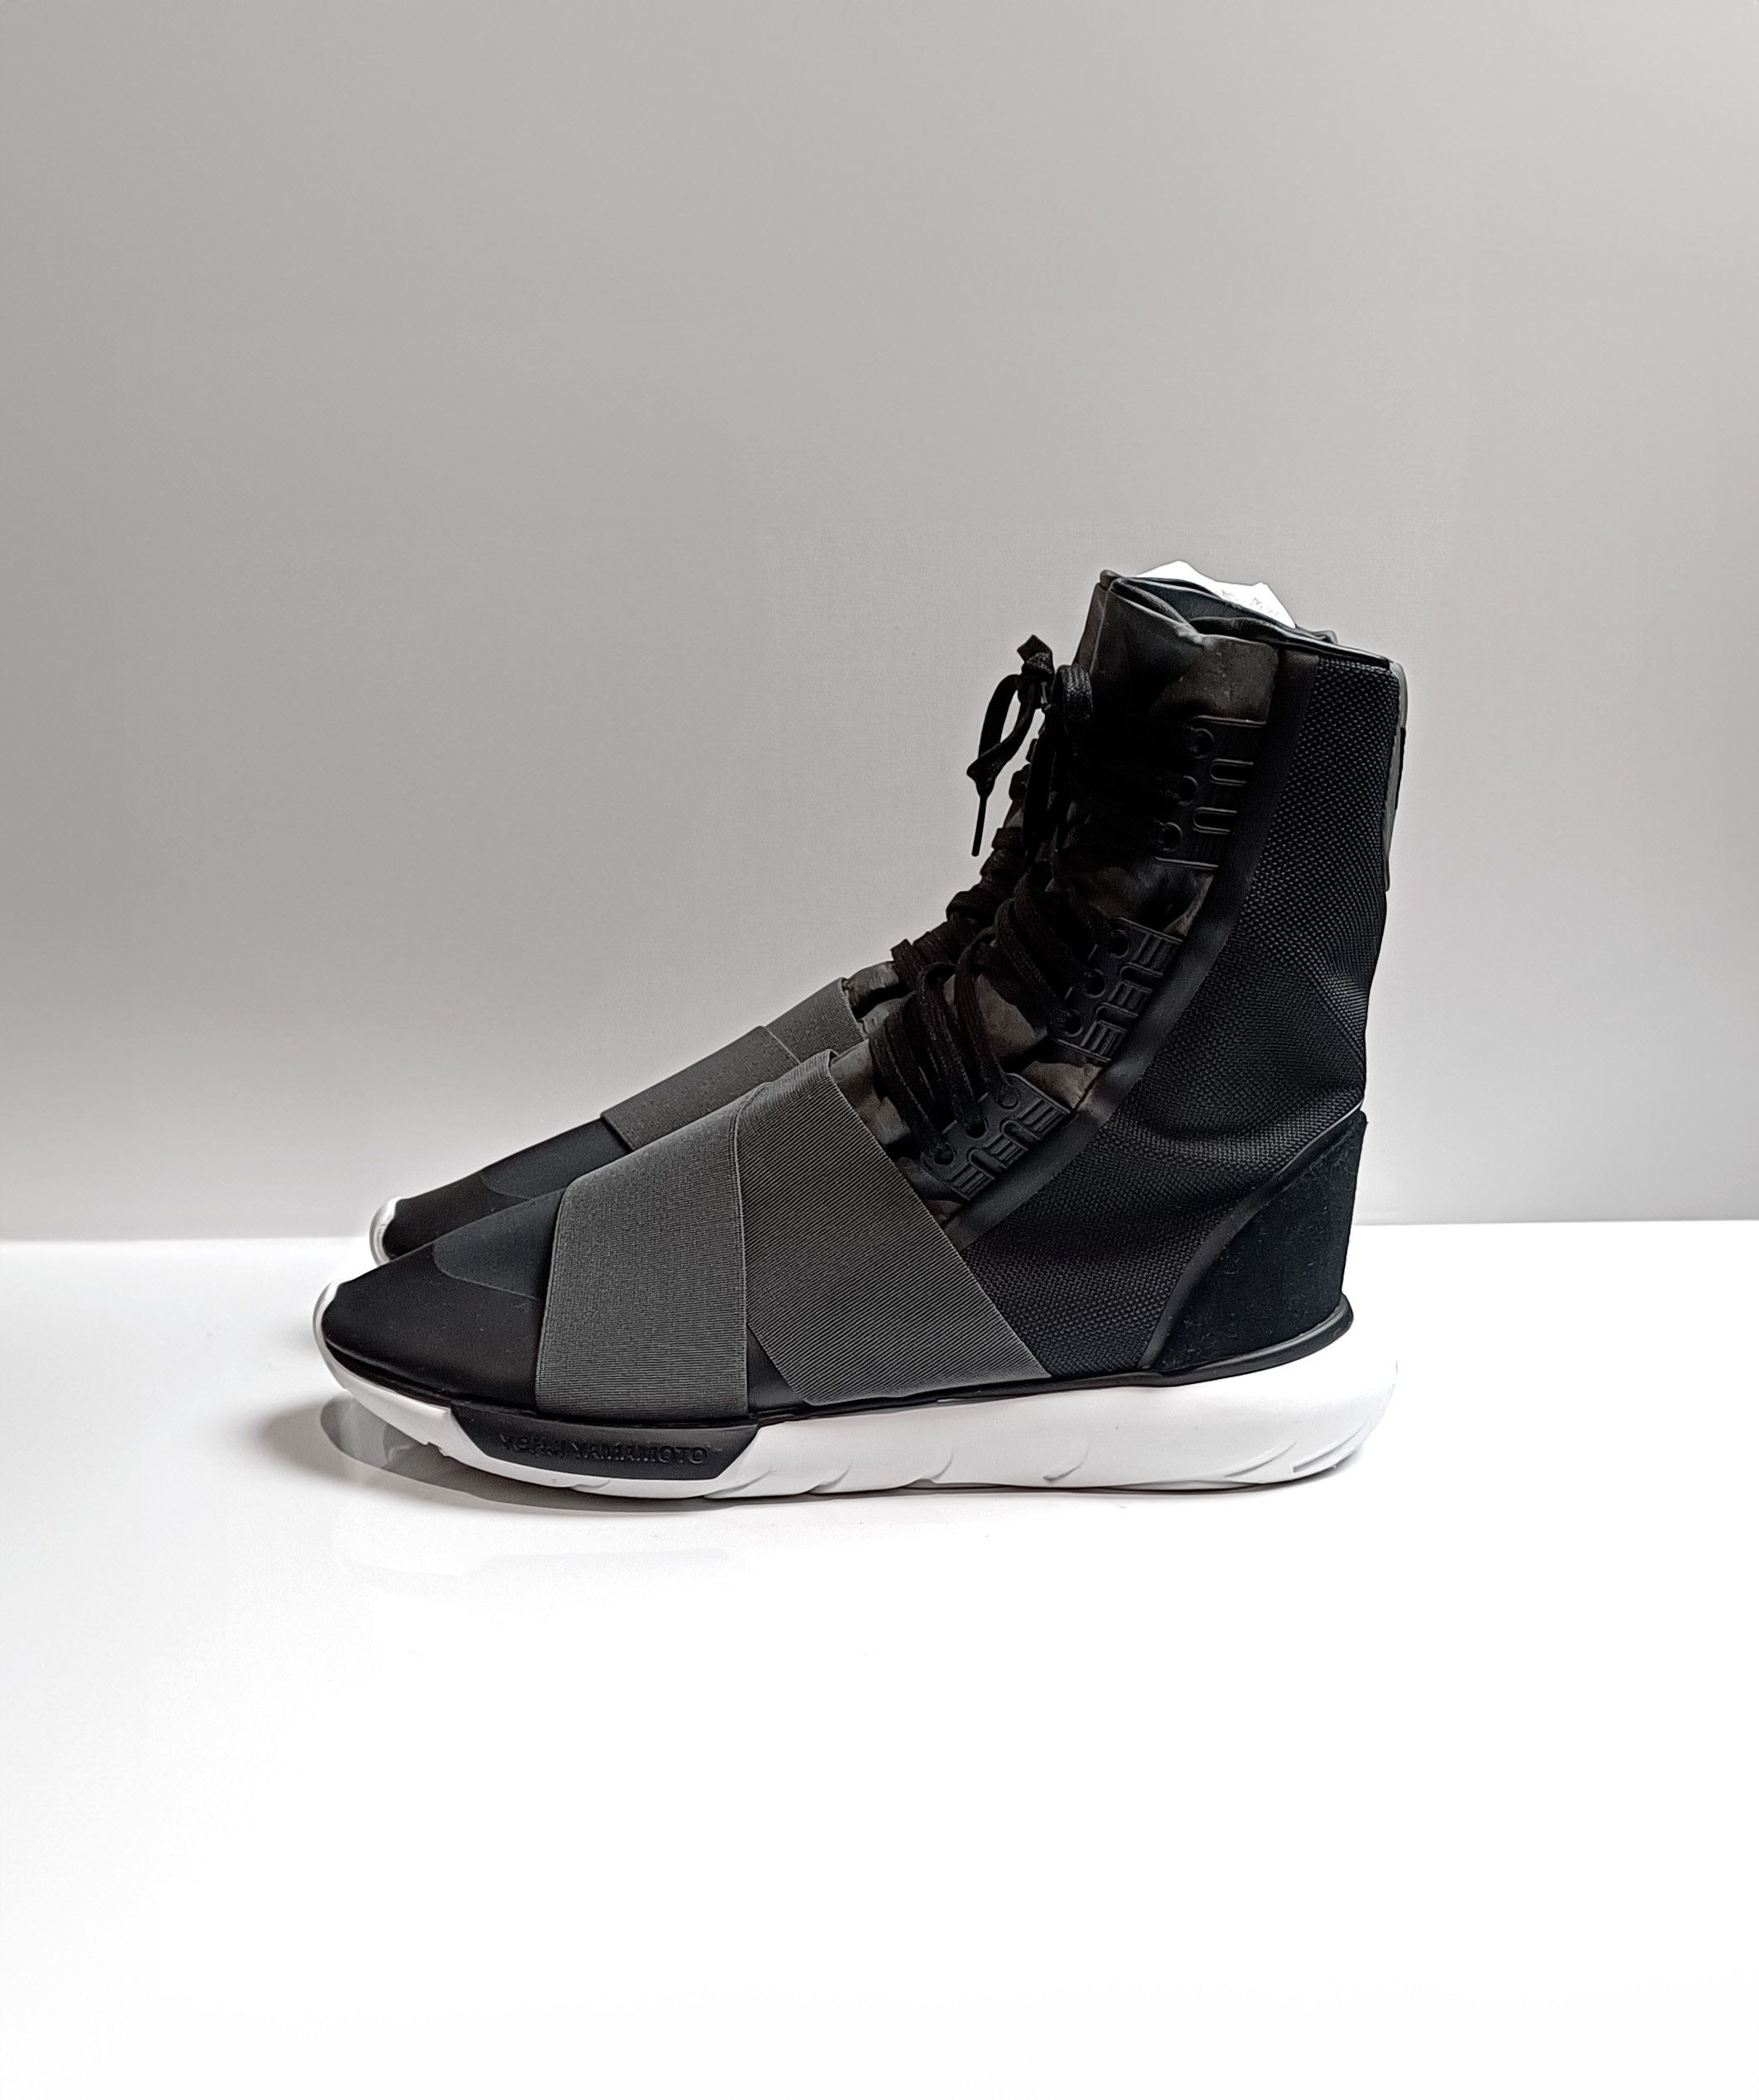 Adidas Y-3 Qasa Boot 'Charcoal Black' - 2